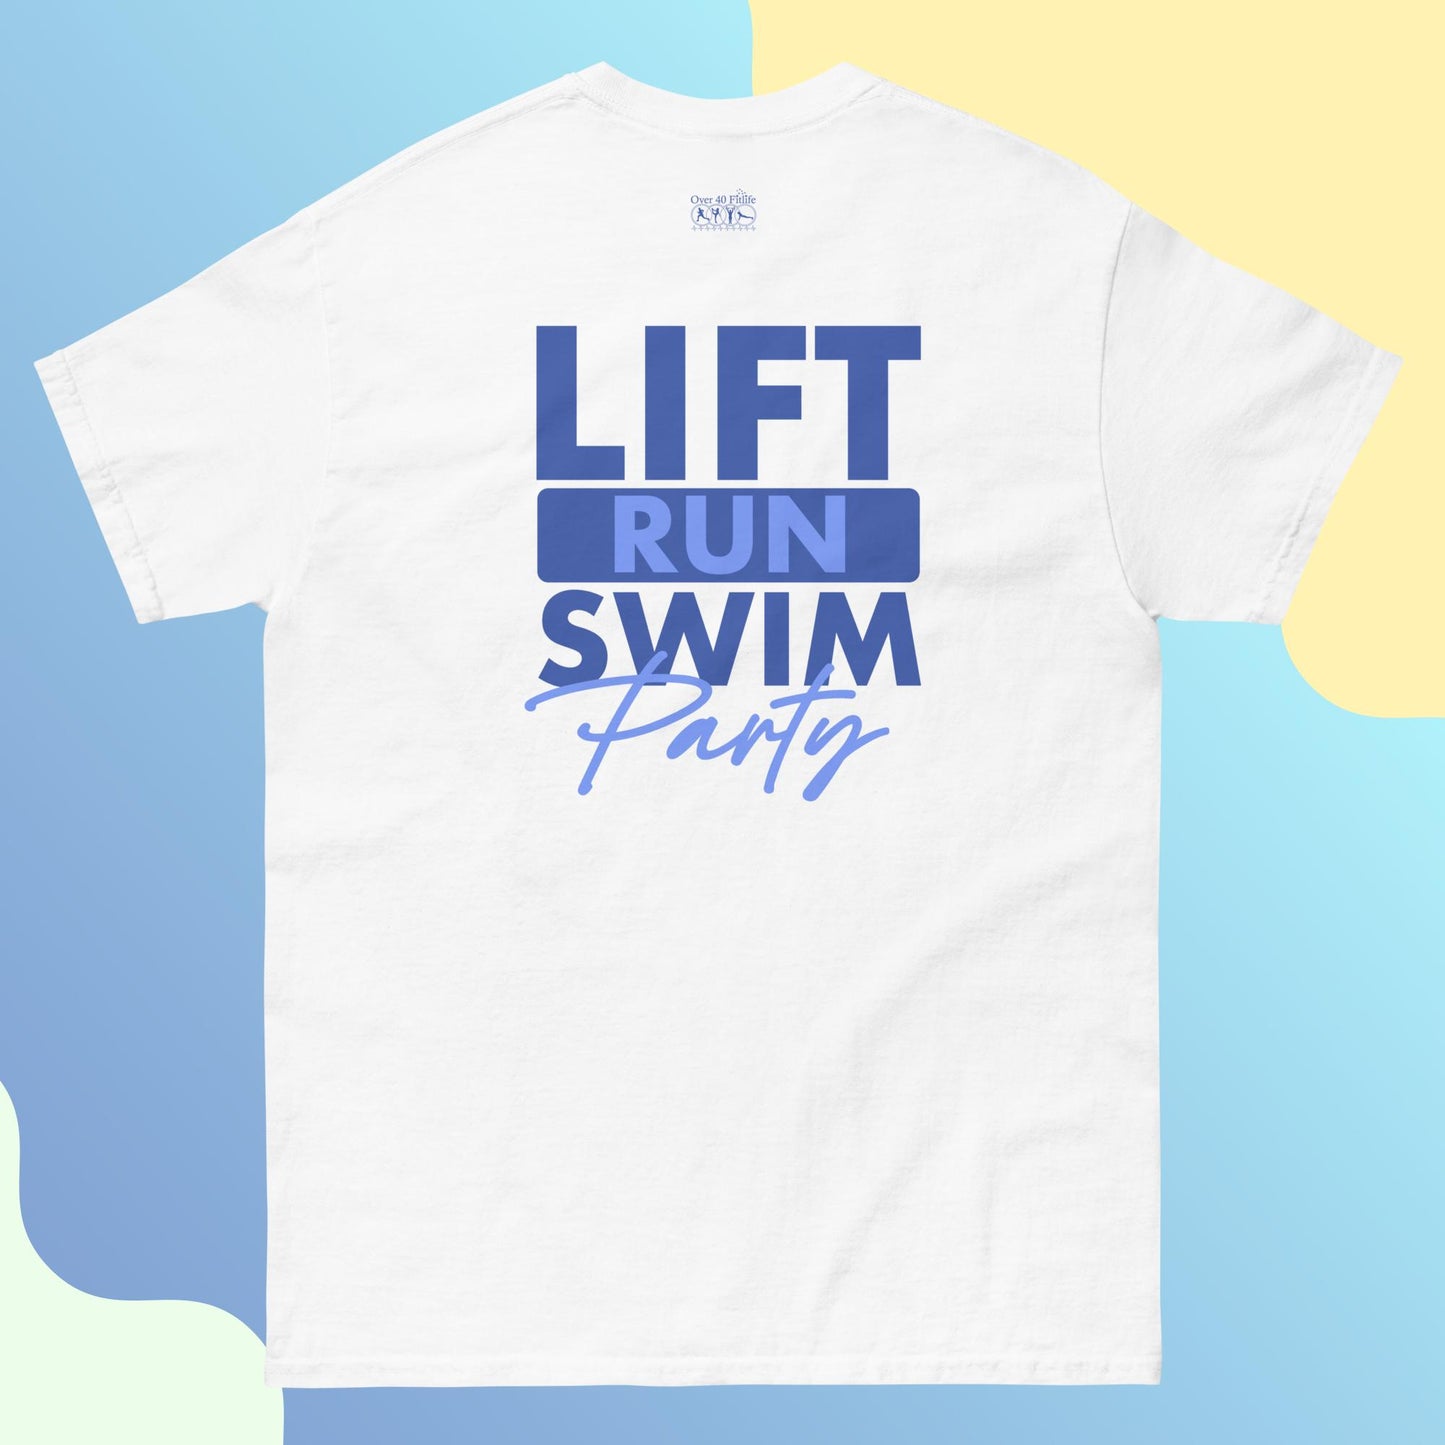 Lift Run Swim Party Tee